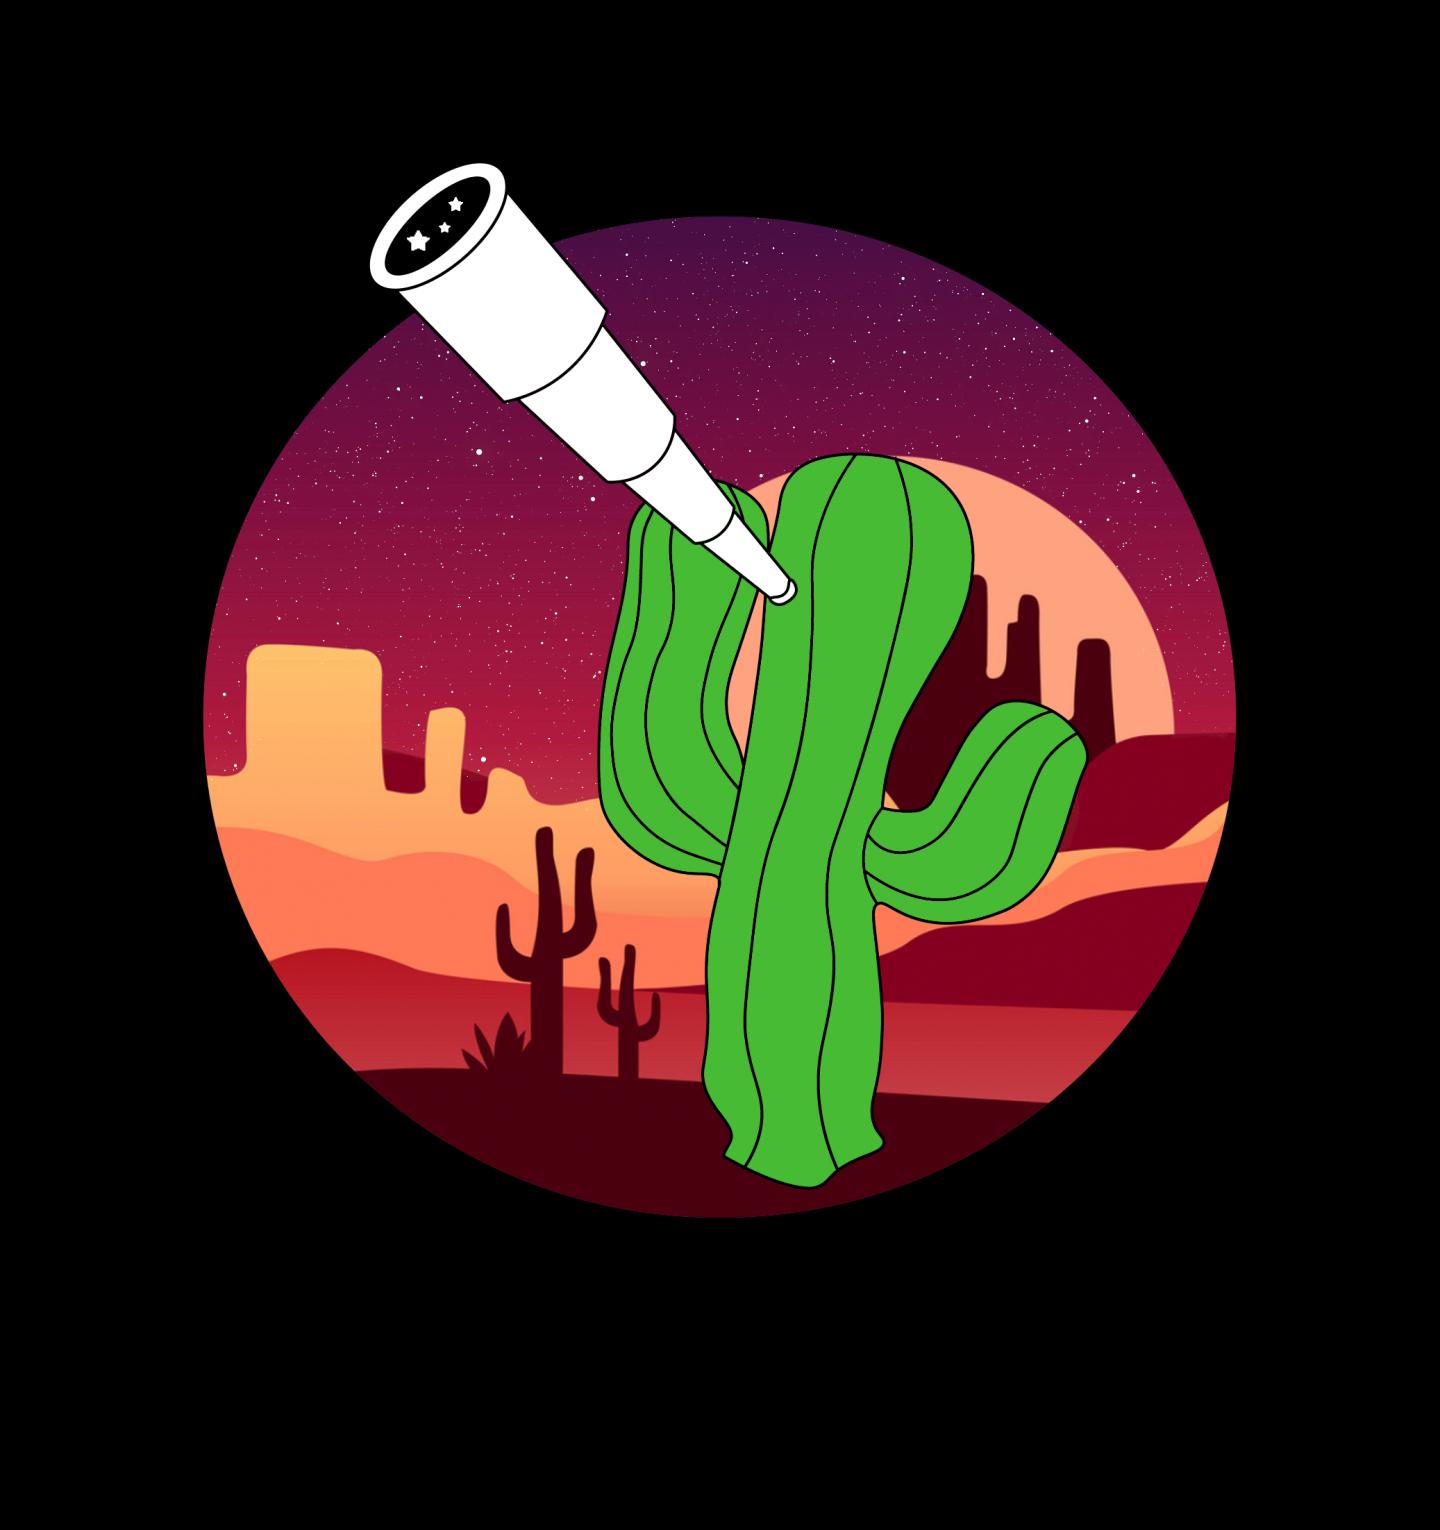 Saguaro Logo